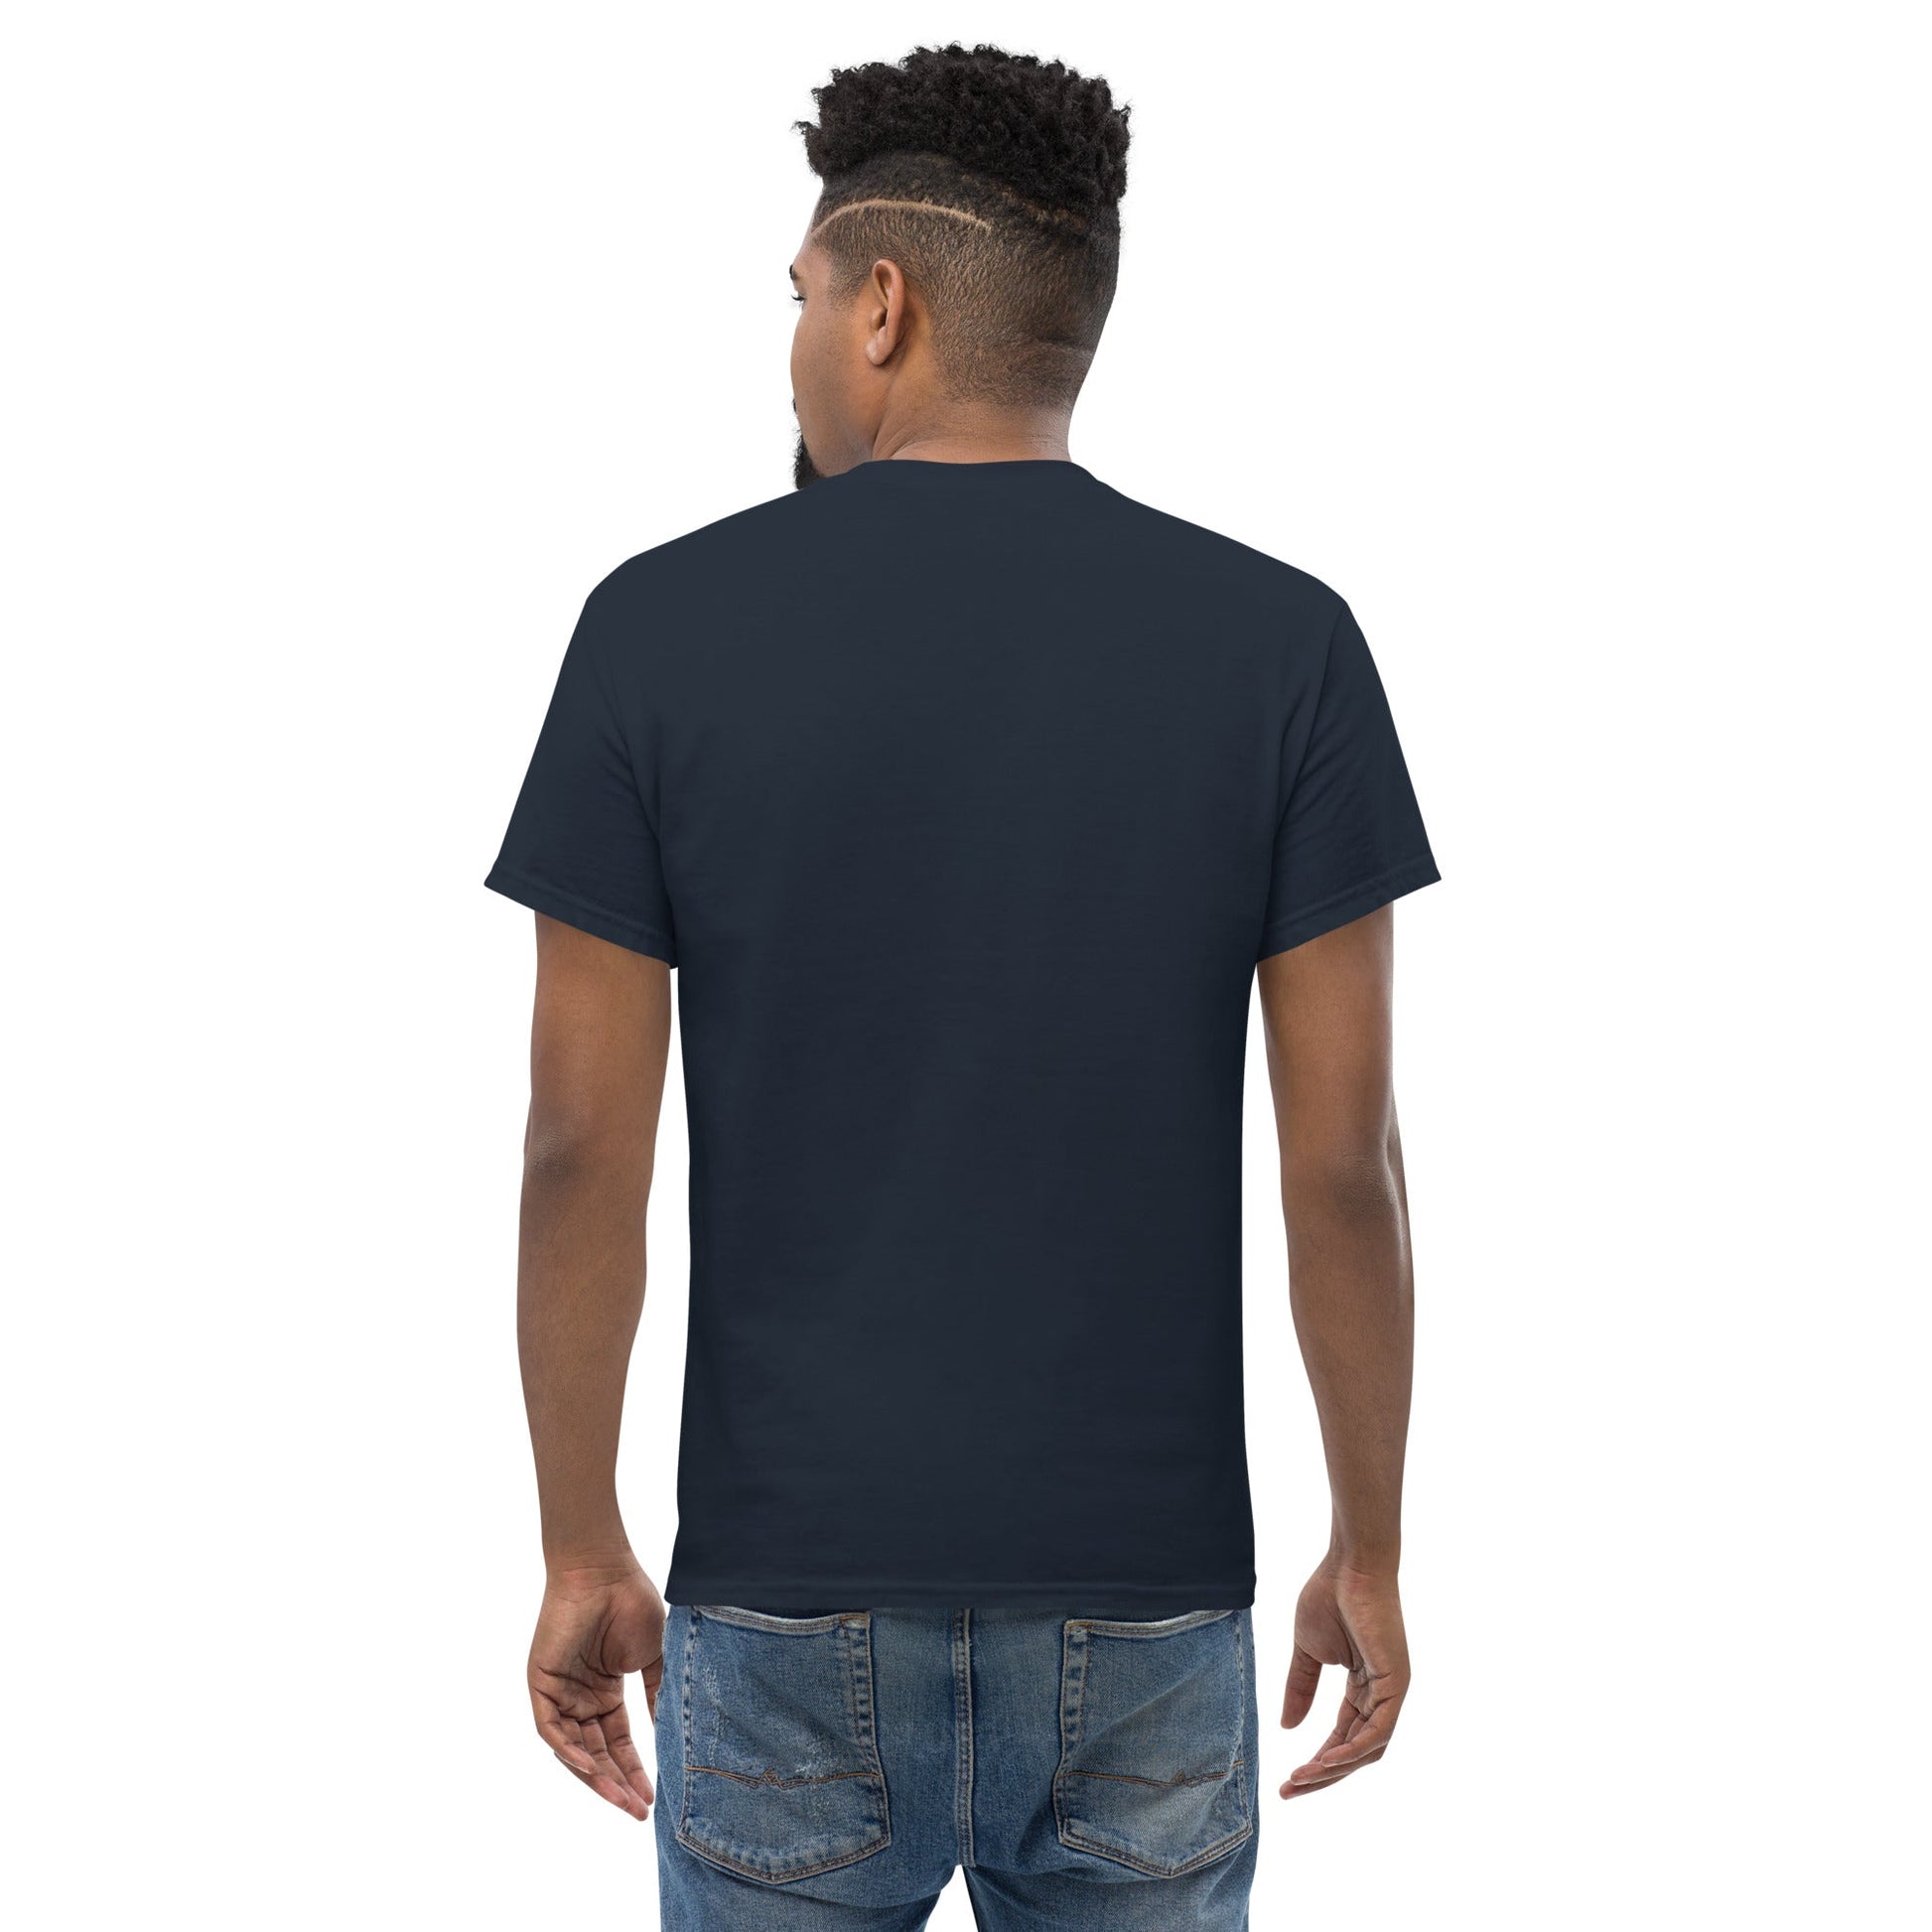 T-shirt classique homme "Démons" gravure blanche Free Shipping - The Needles Factory